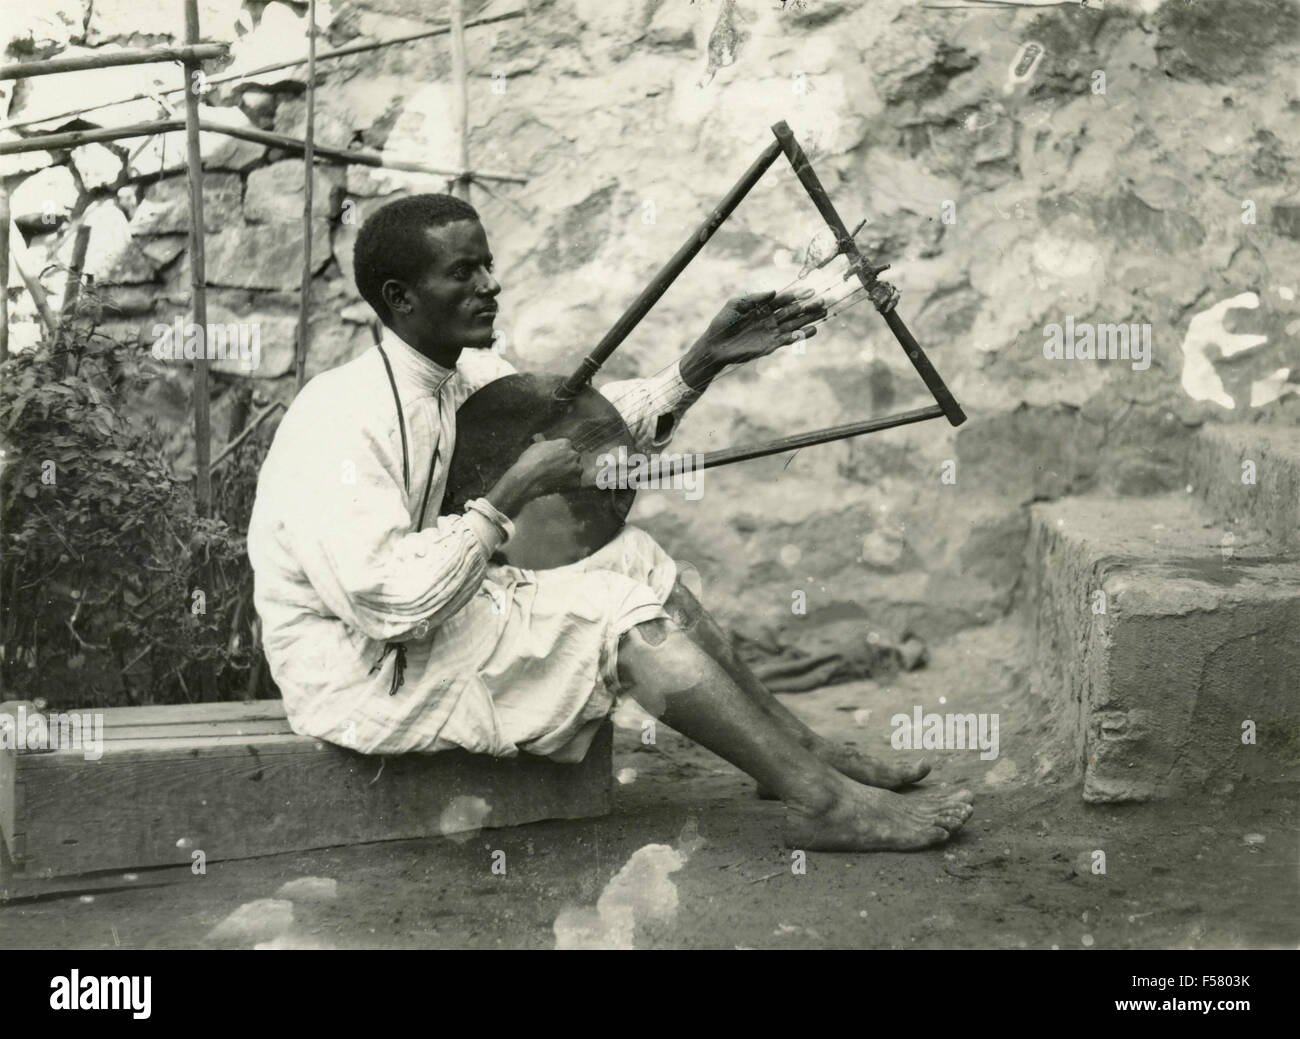 Un africano toca un instrumento musical de cuerdas triangular Foto de stock